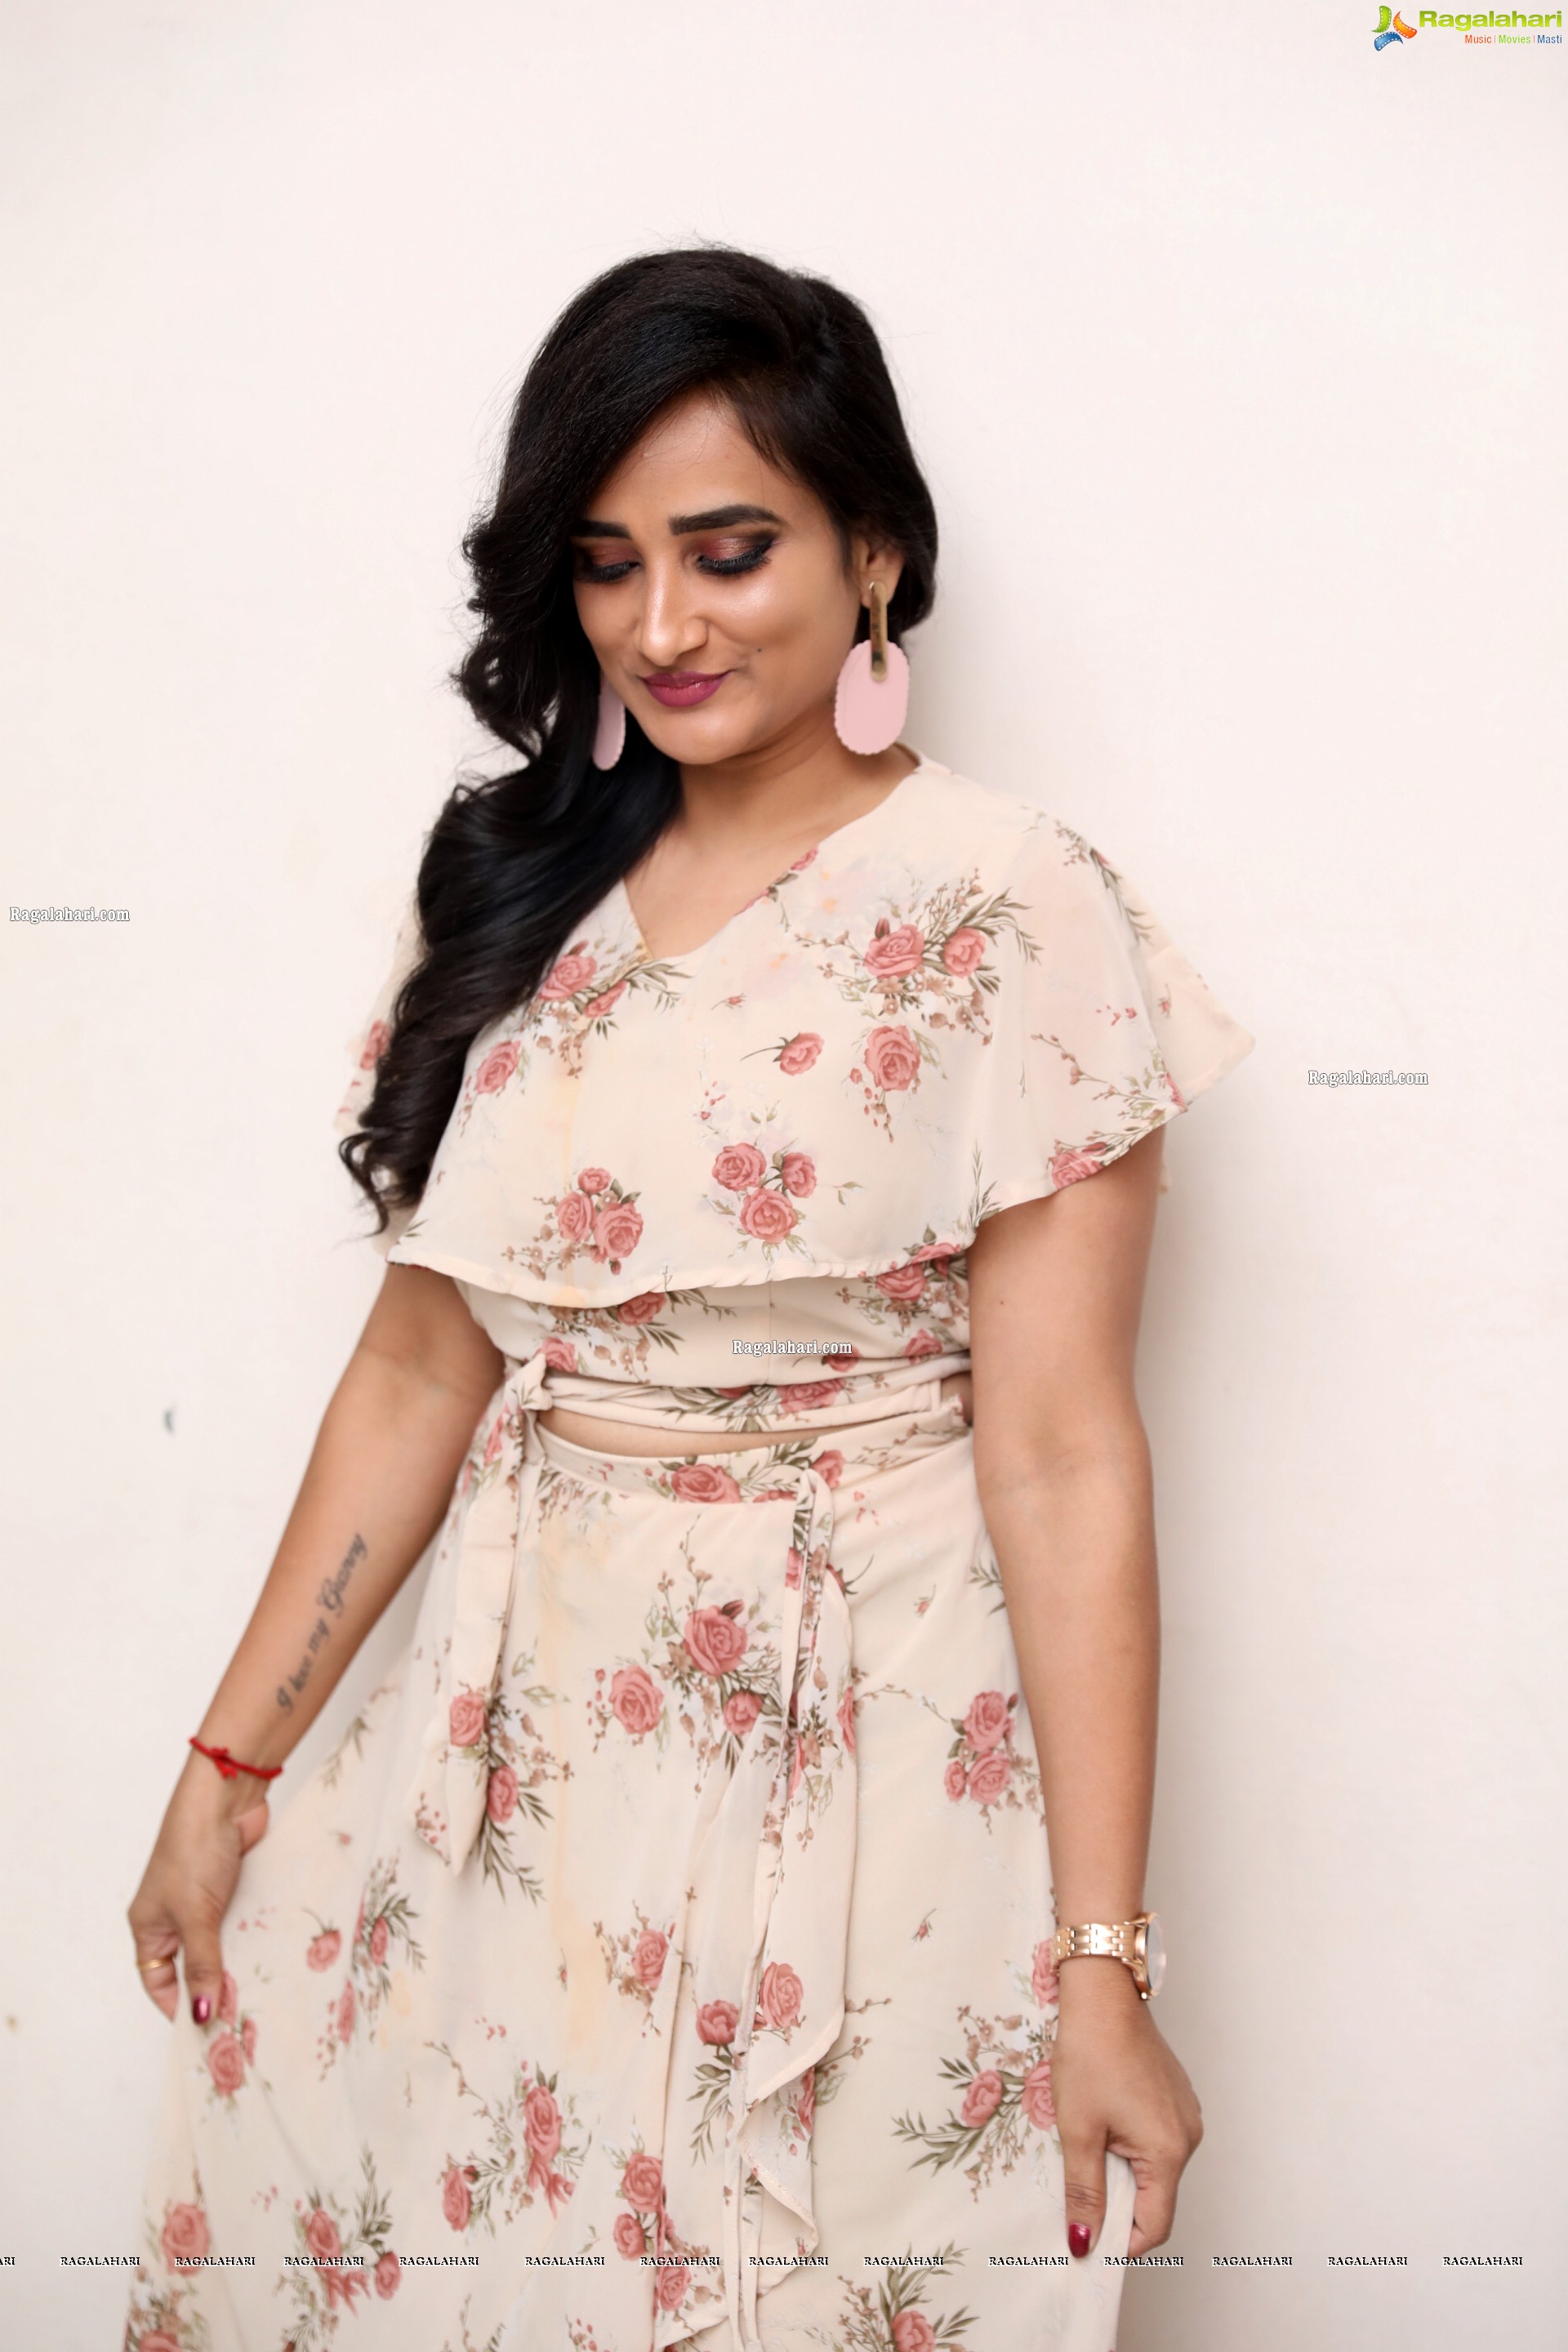 Madhu Krishnan in Beige Floral Frill Dress, HD Photo Gallery